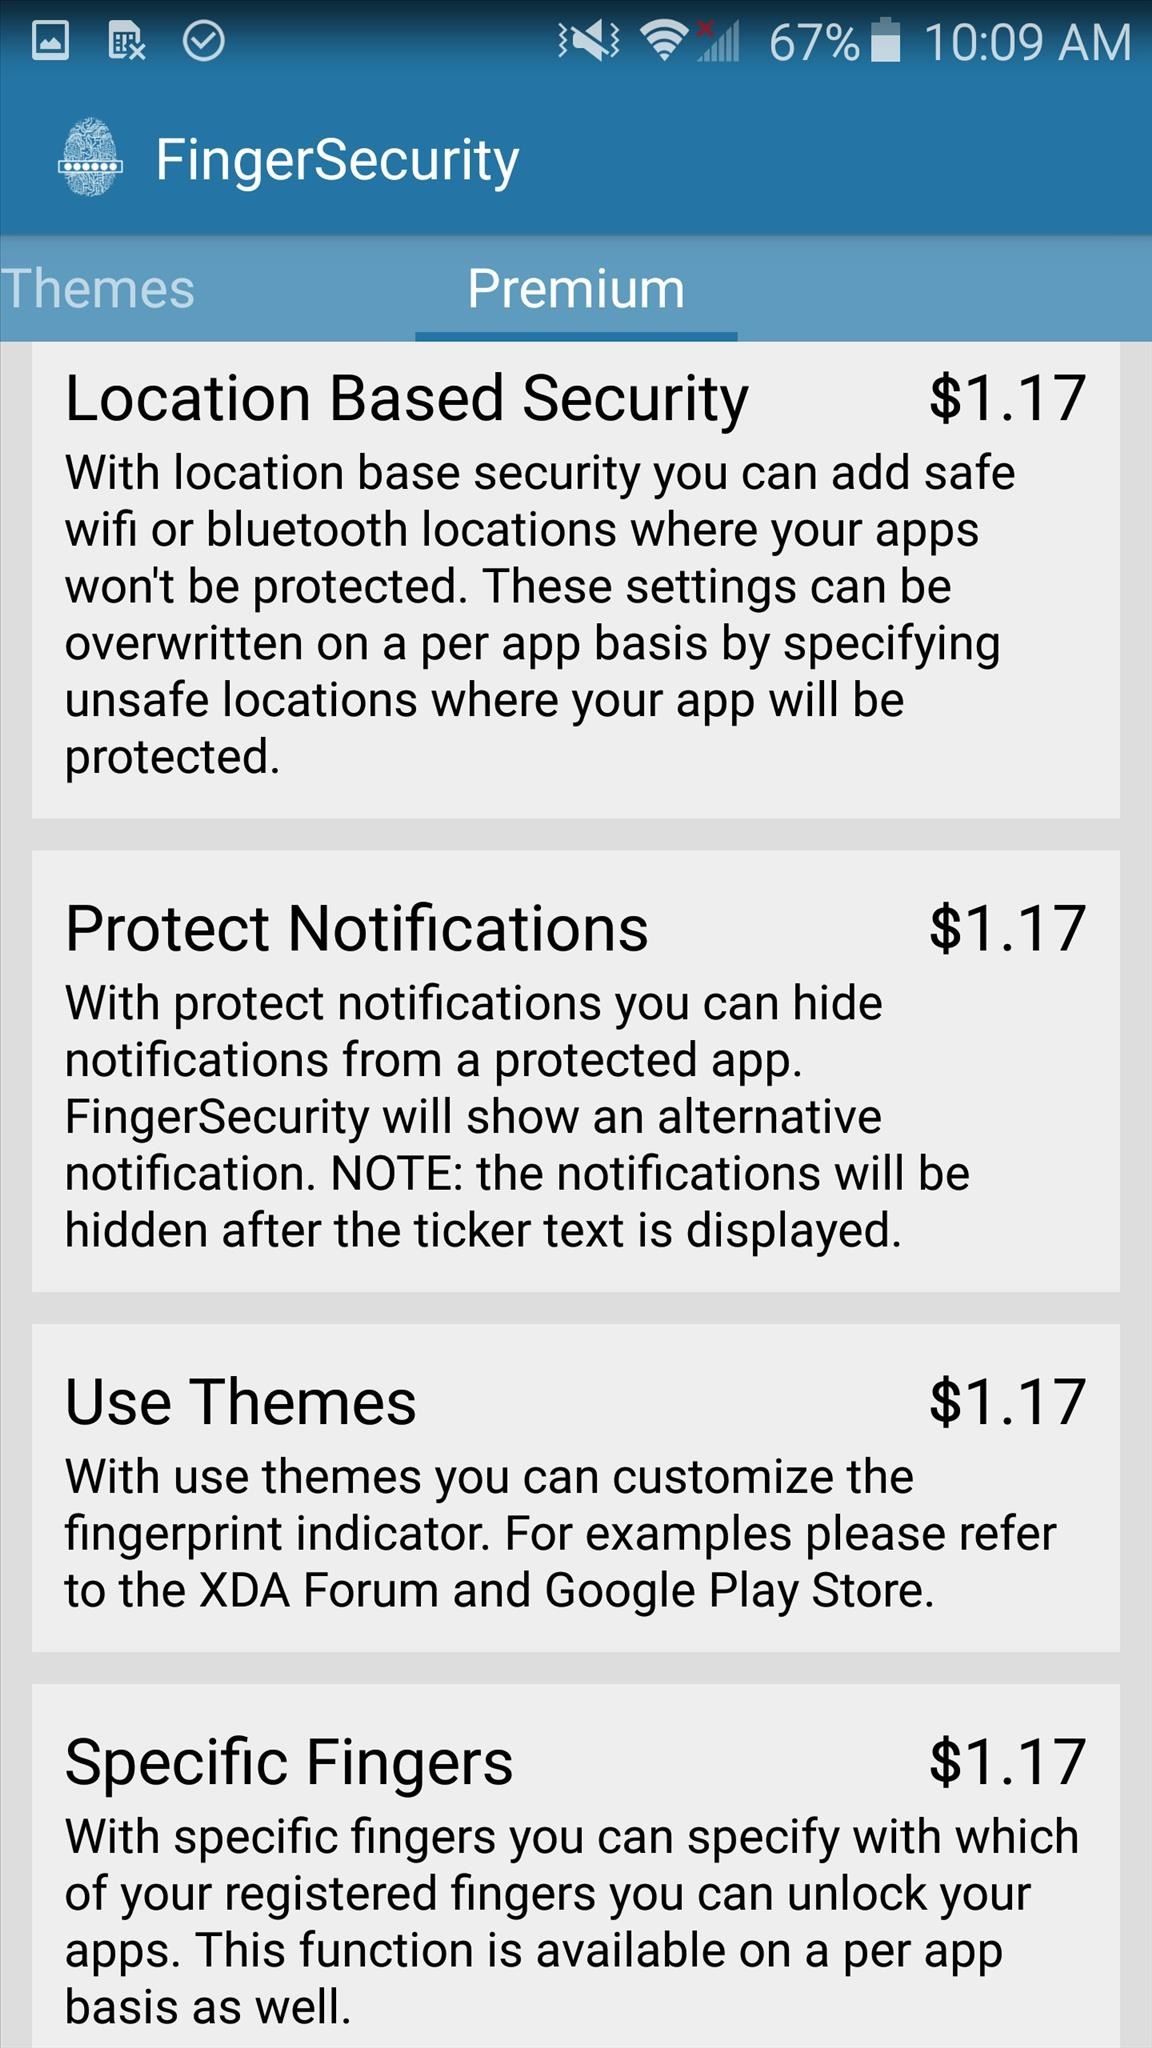 Lock Apps Using Your Samsung Galaxy S6’s Fingerprint Scanner